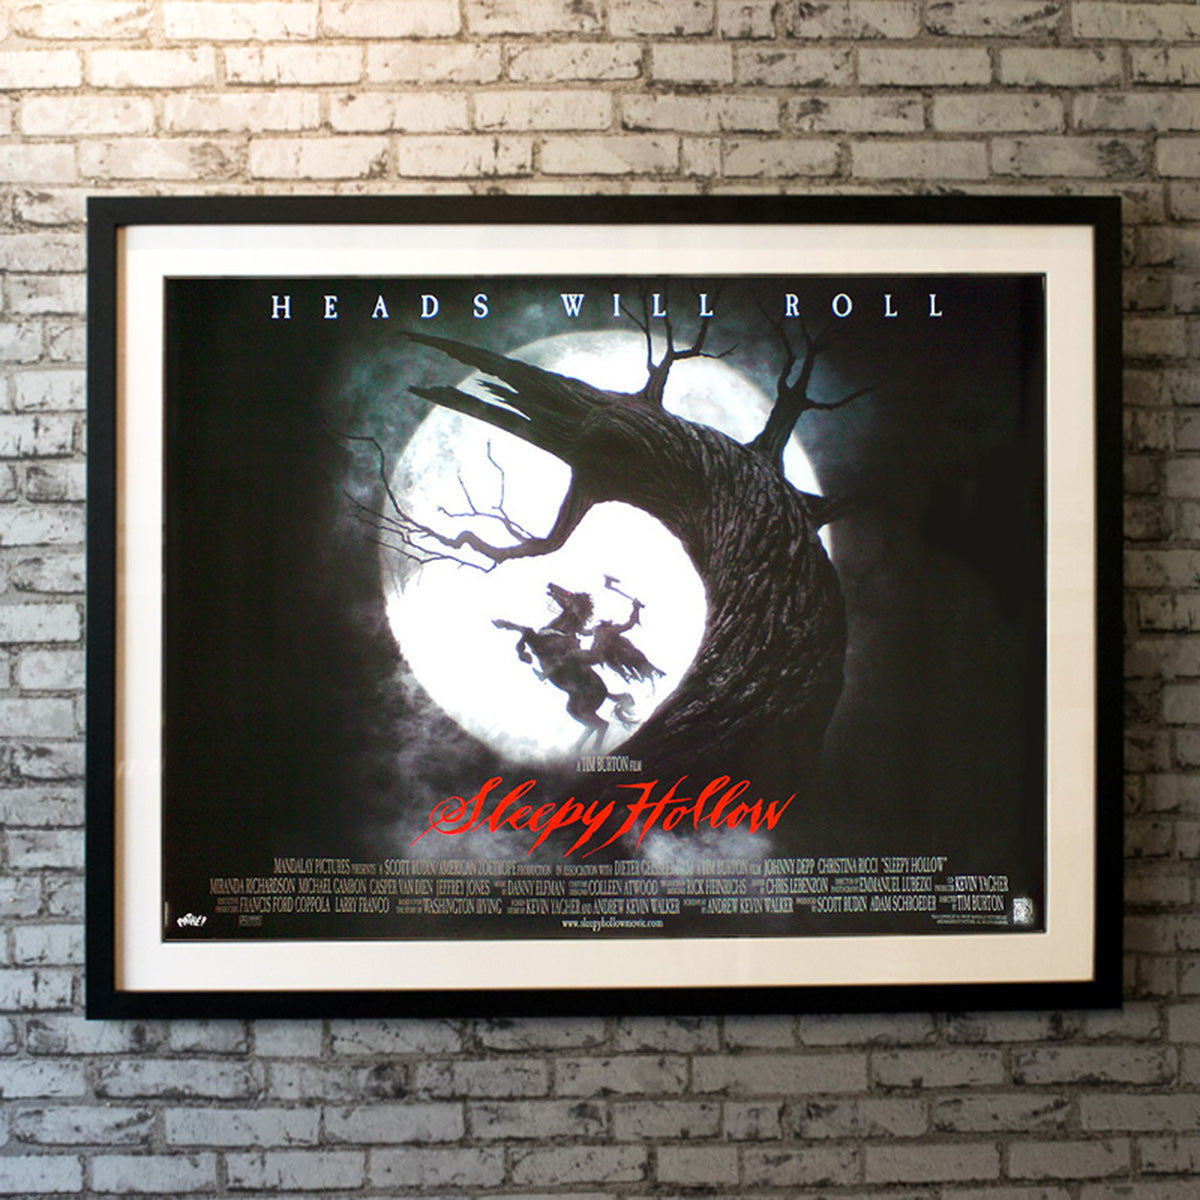 Original Movie Poster of Sleepy Hollow (1999)